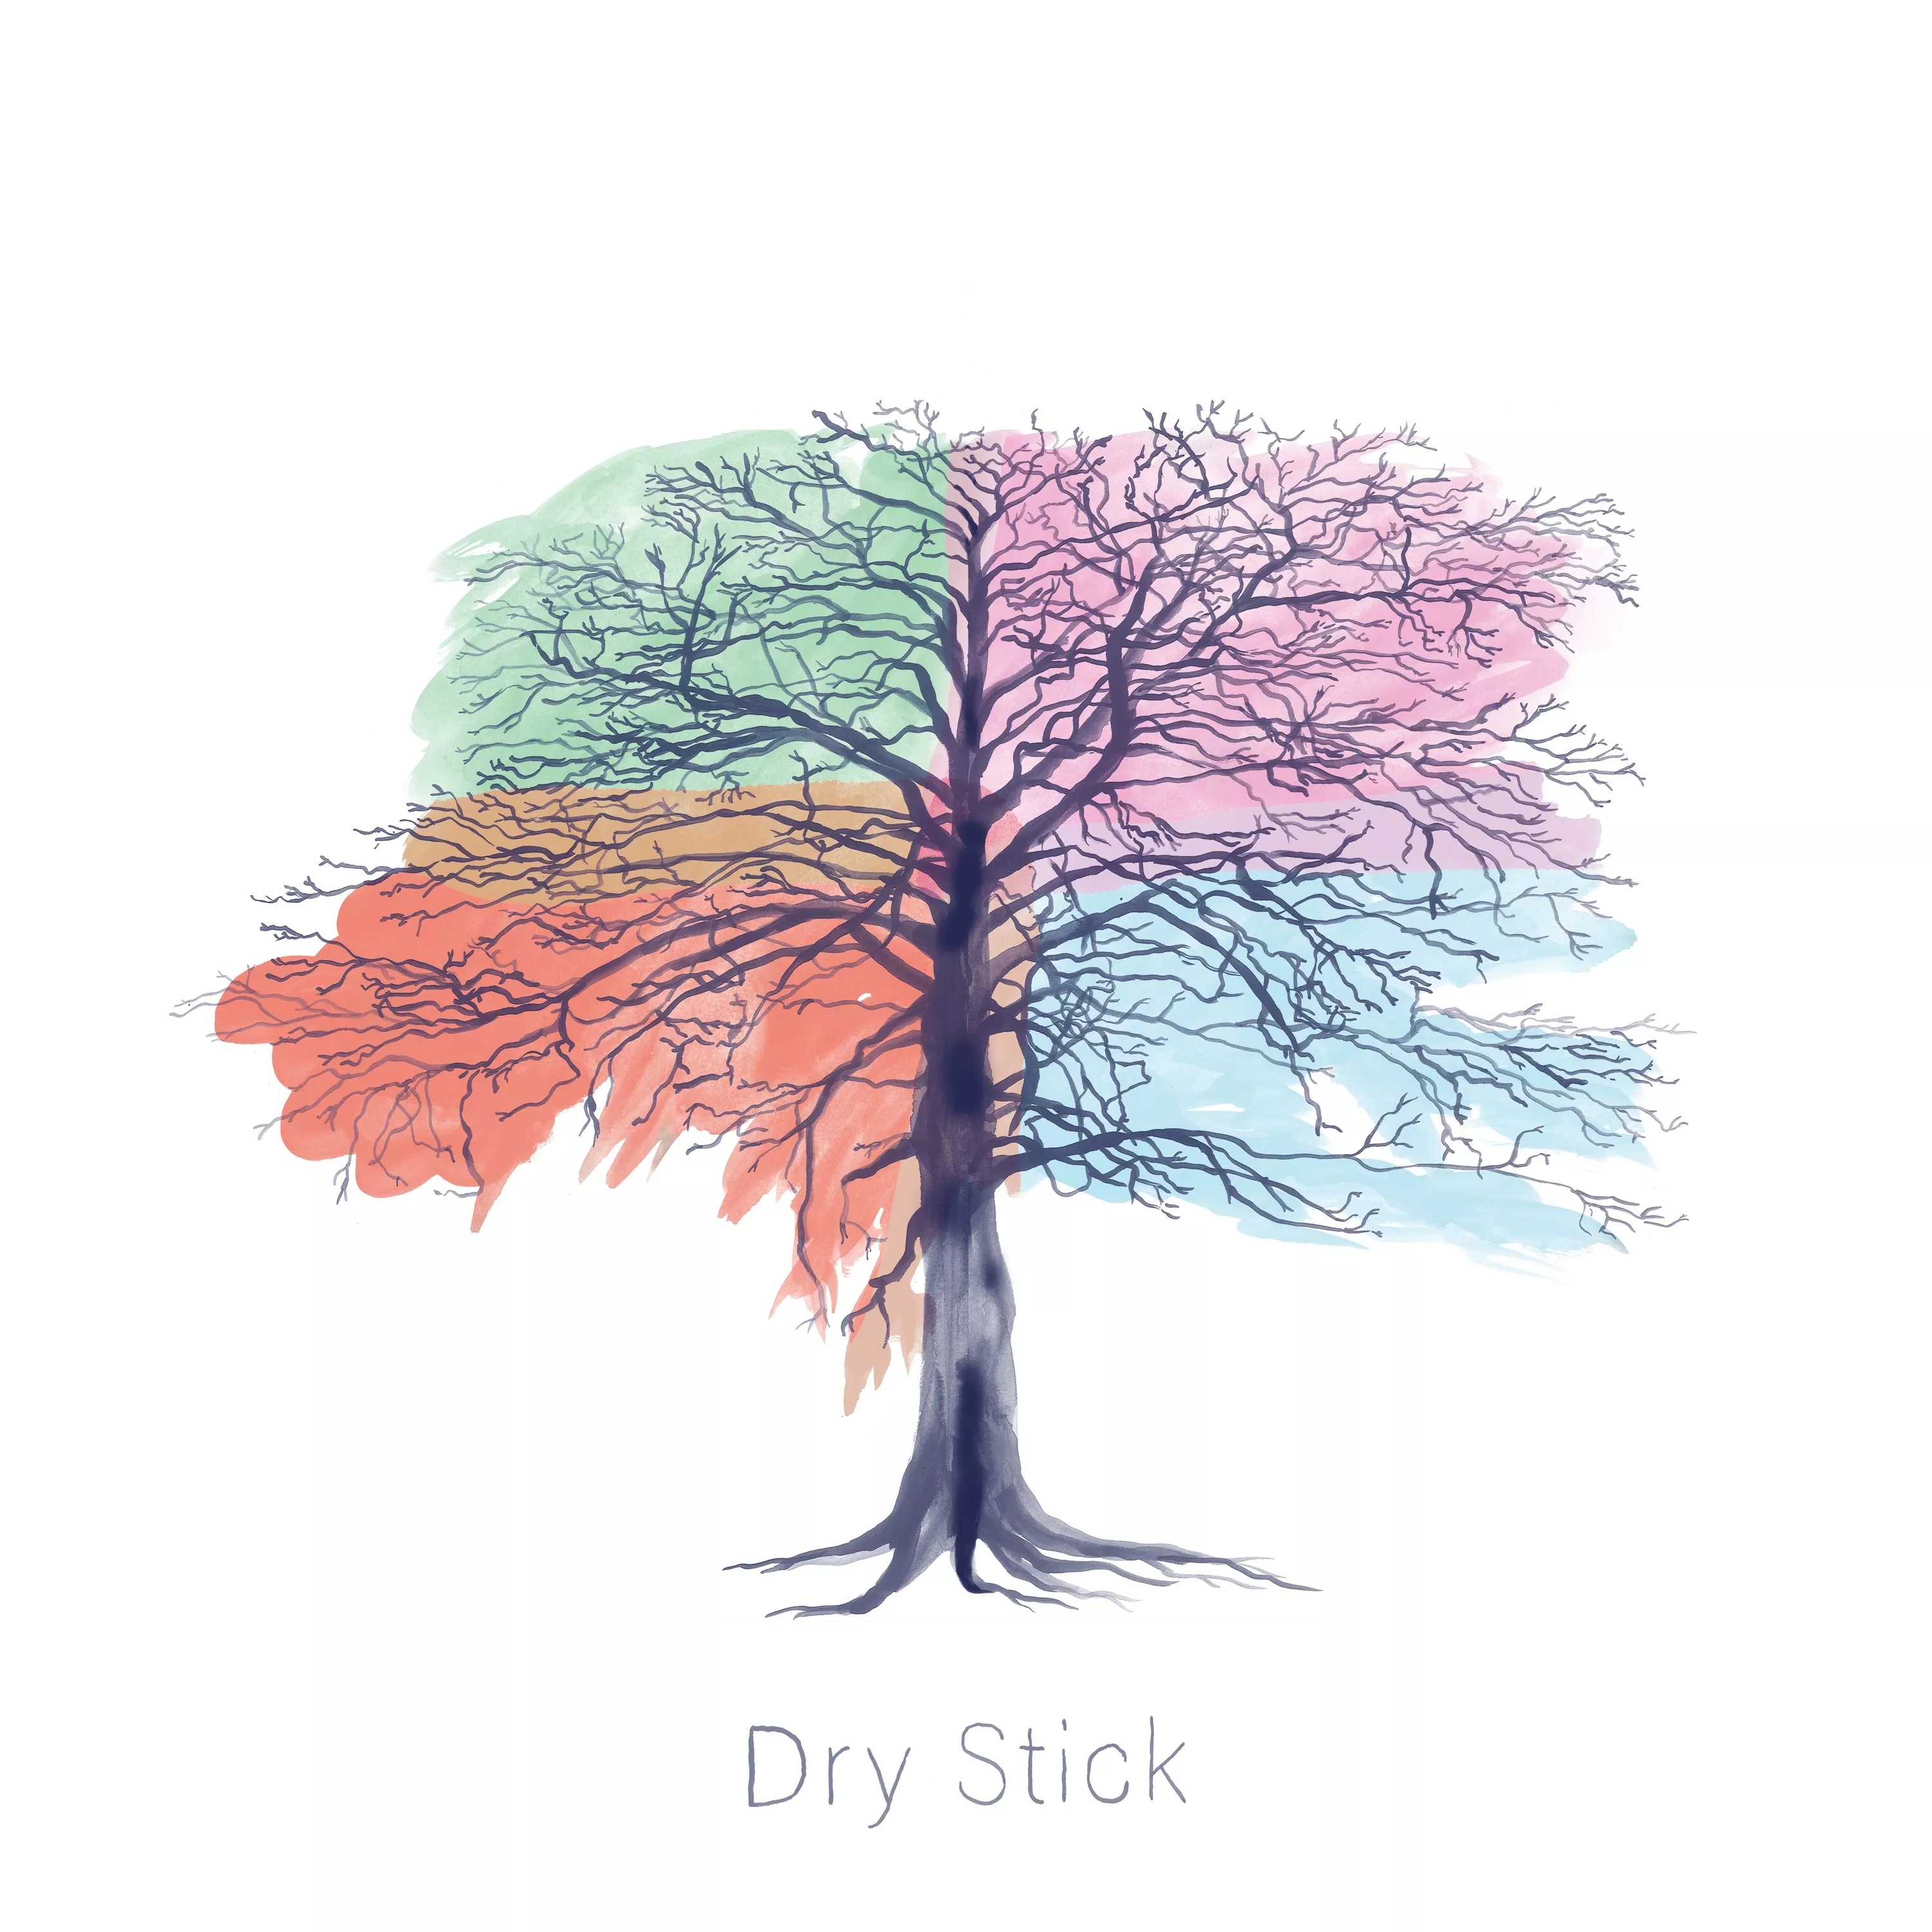 Annualis Naturalis - Dry Stick